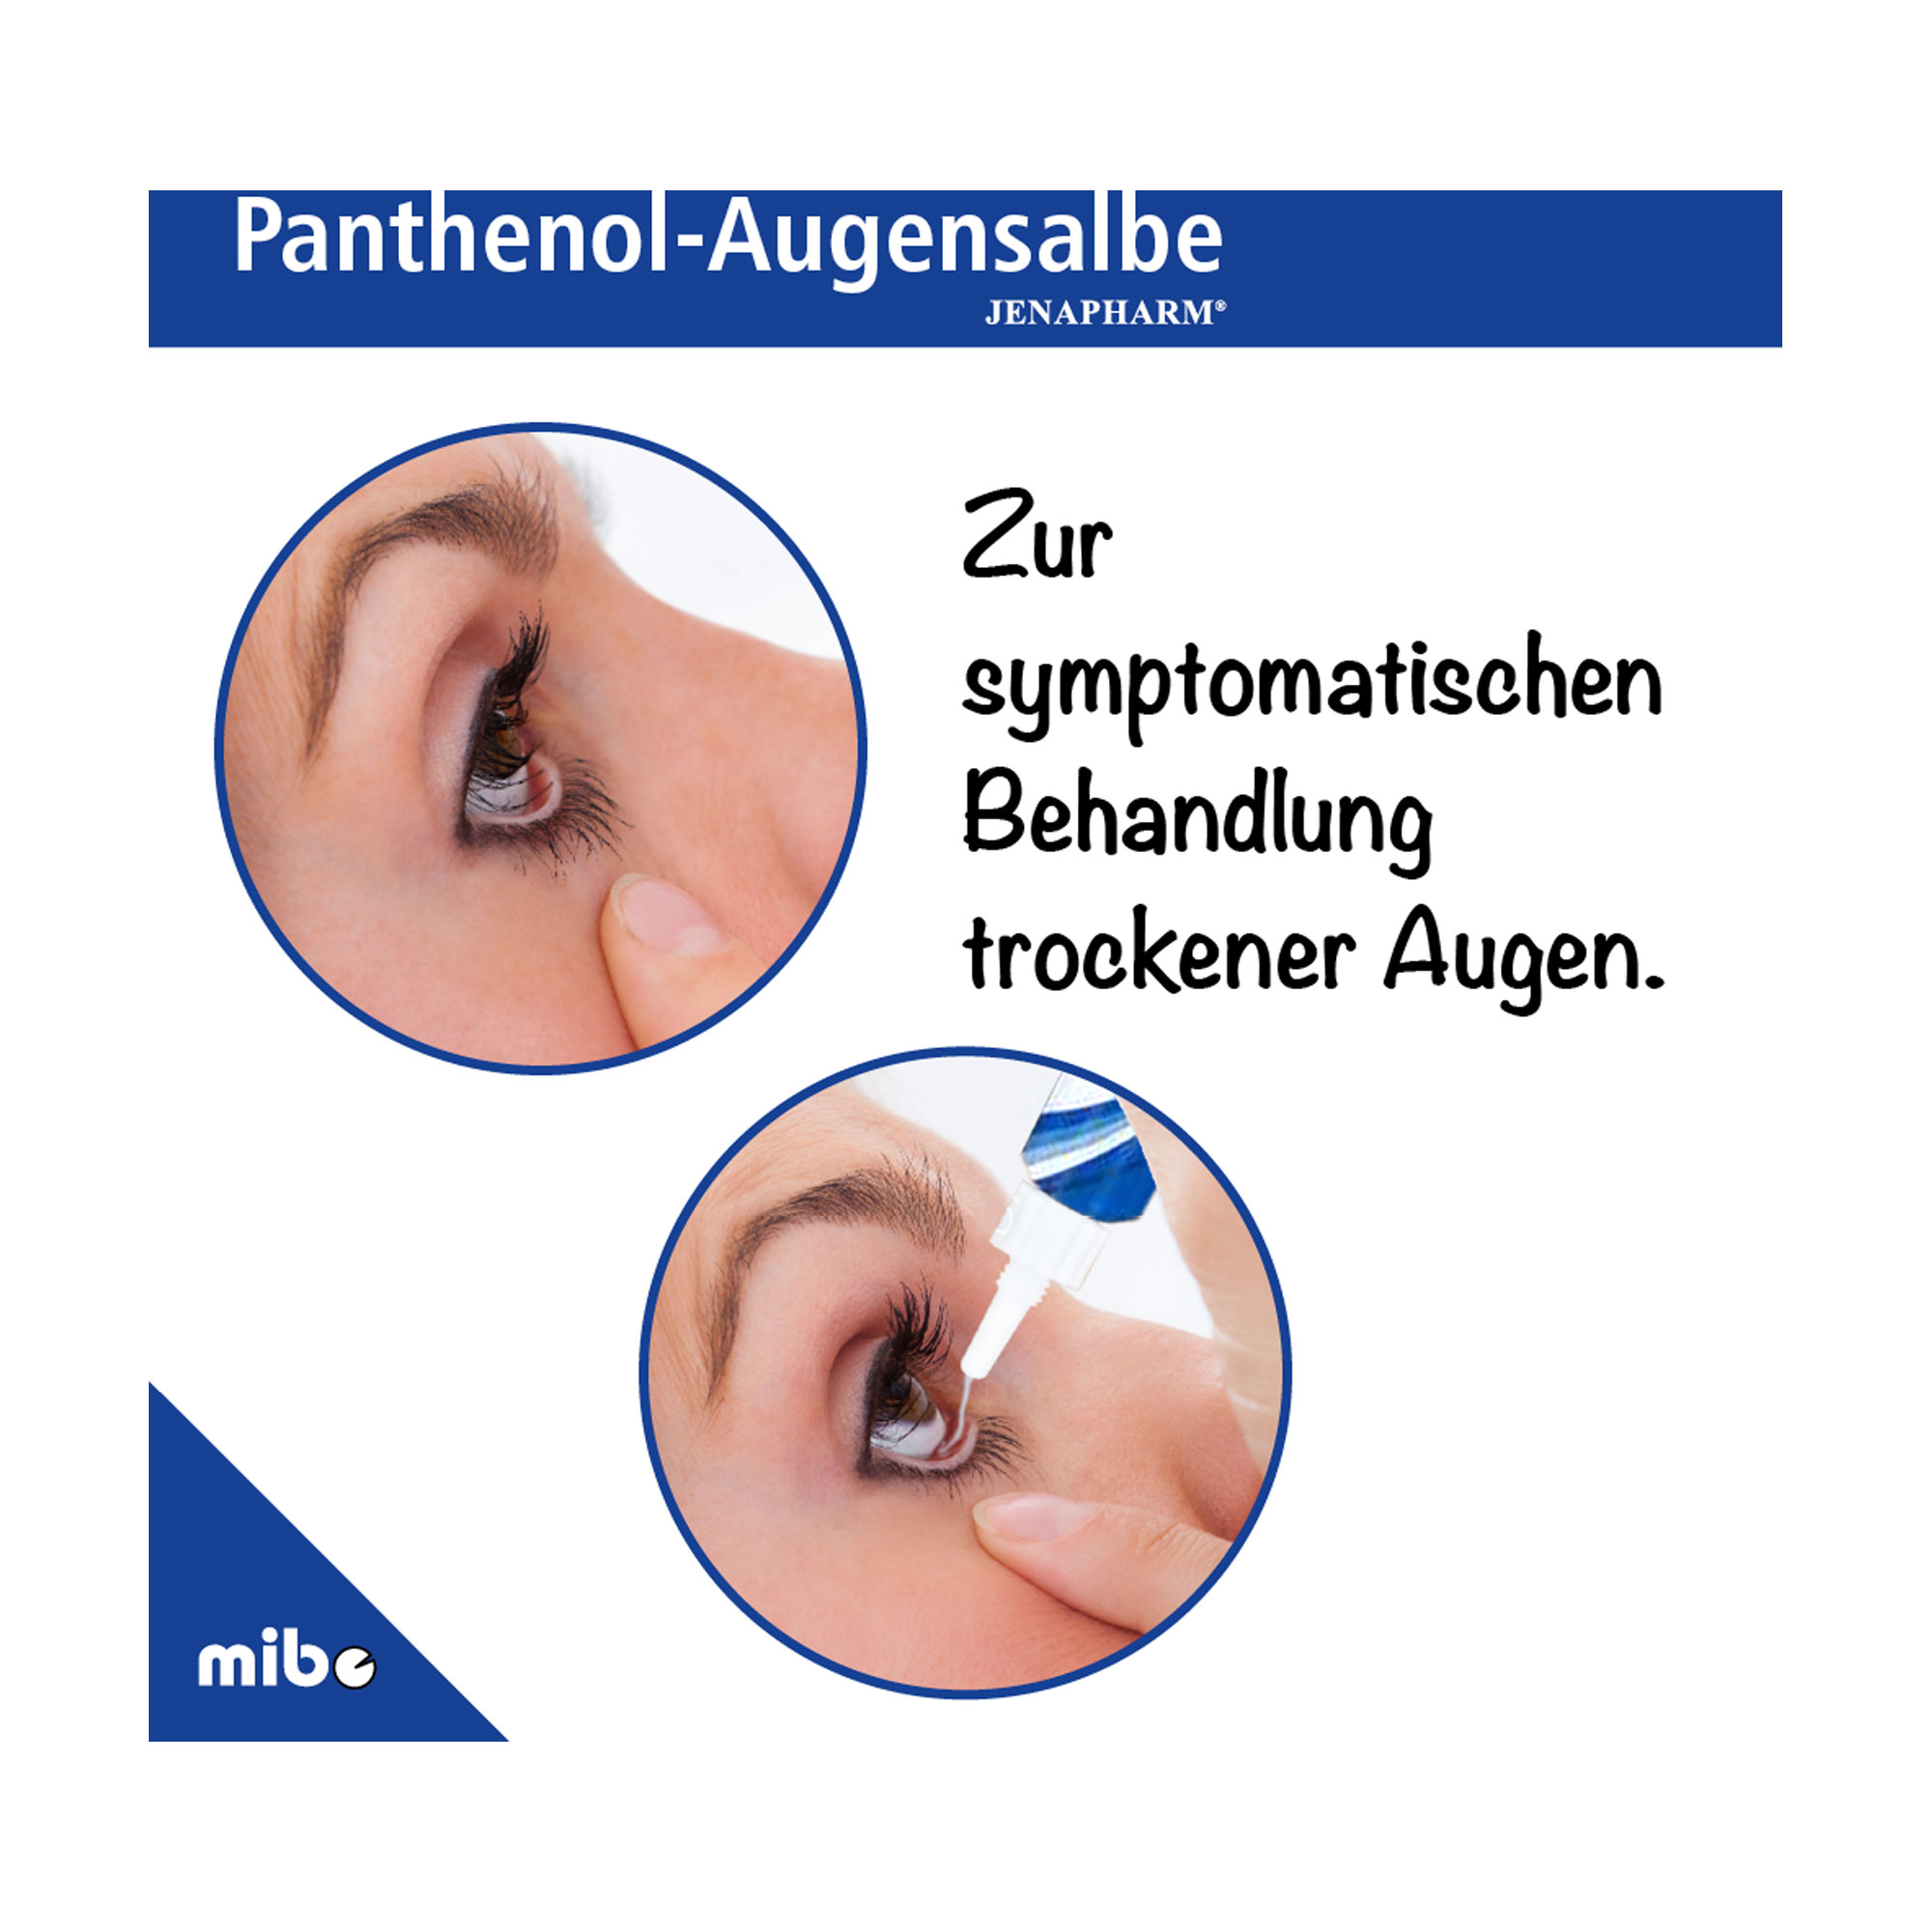 Panthenol-Augensalbe Jenapharm